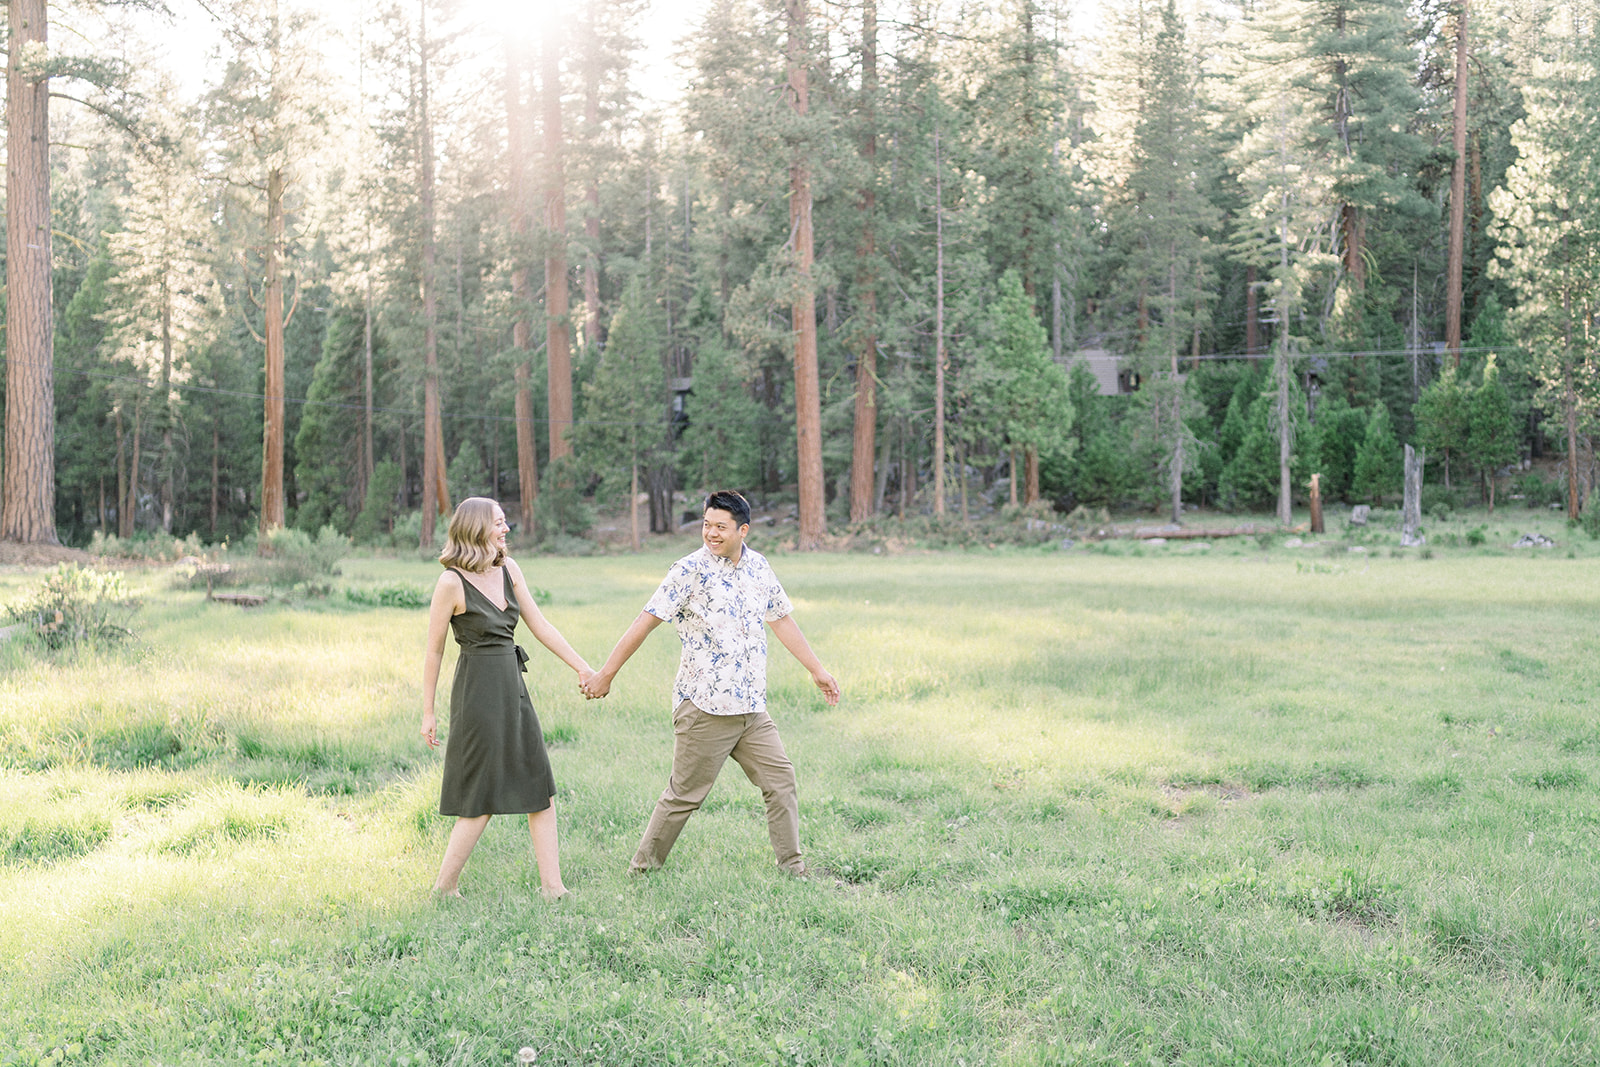 Summer Engagement Photoshoot at Pinecrest Lake, CA